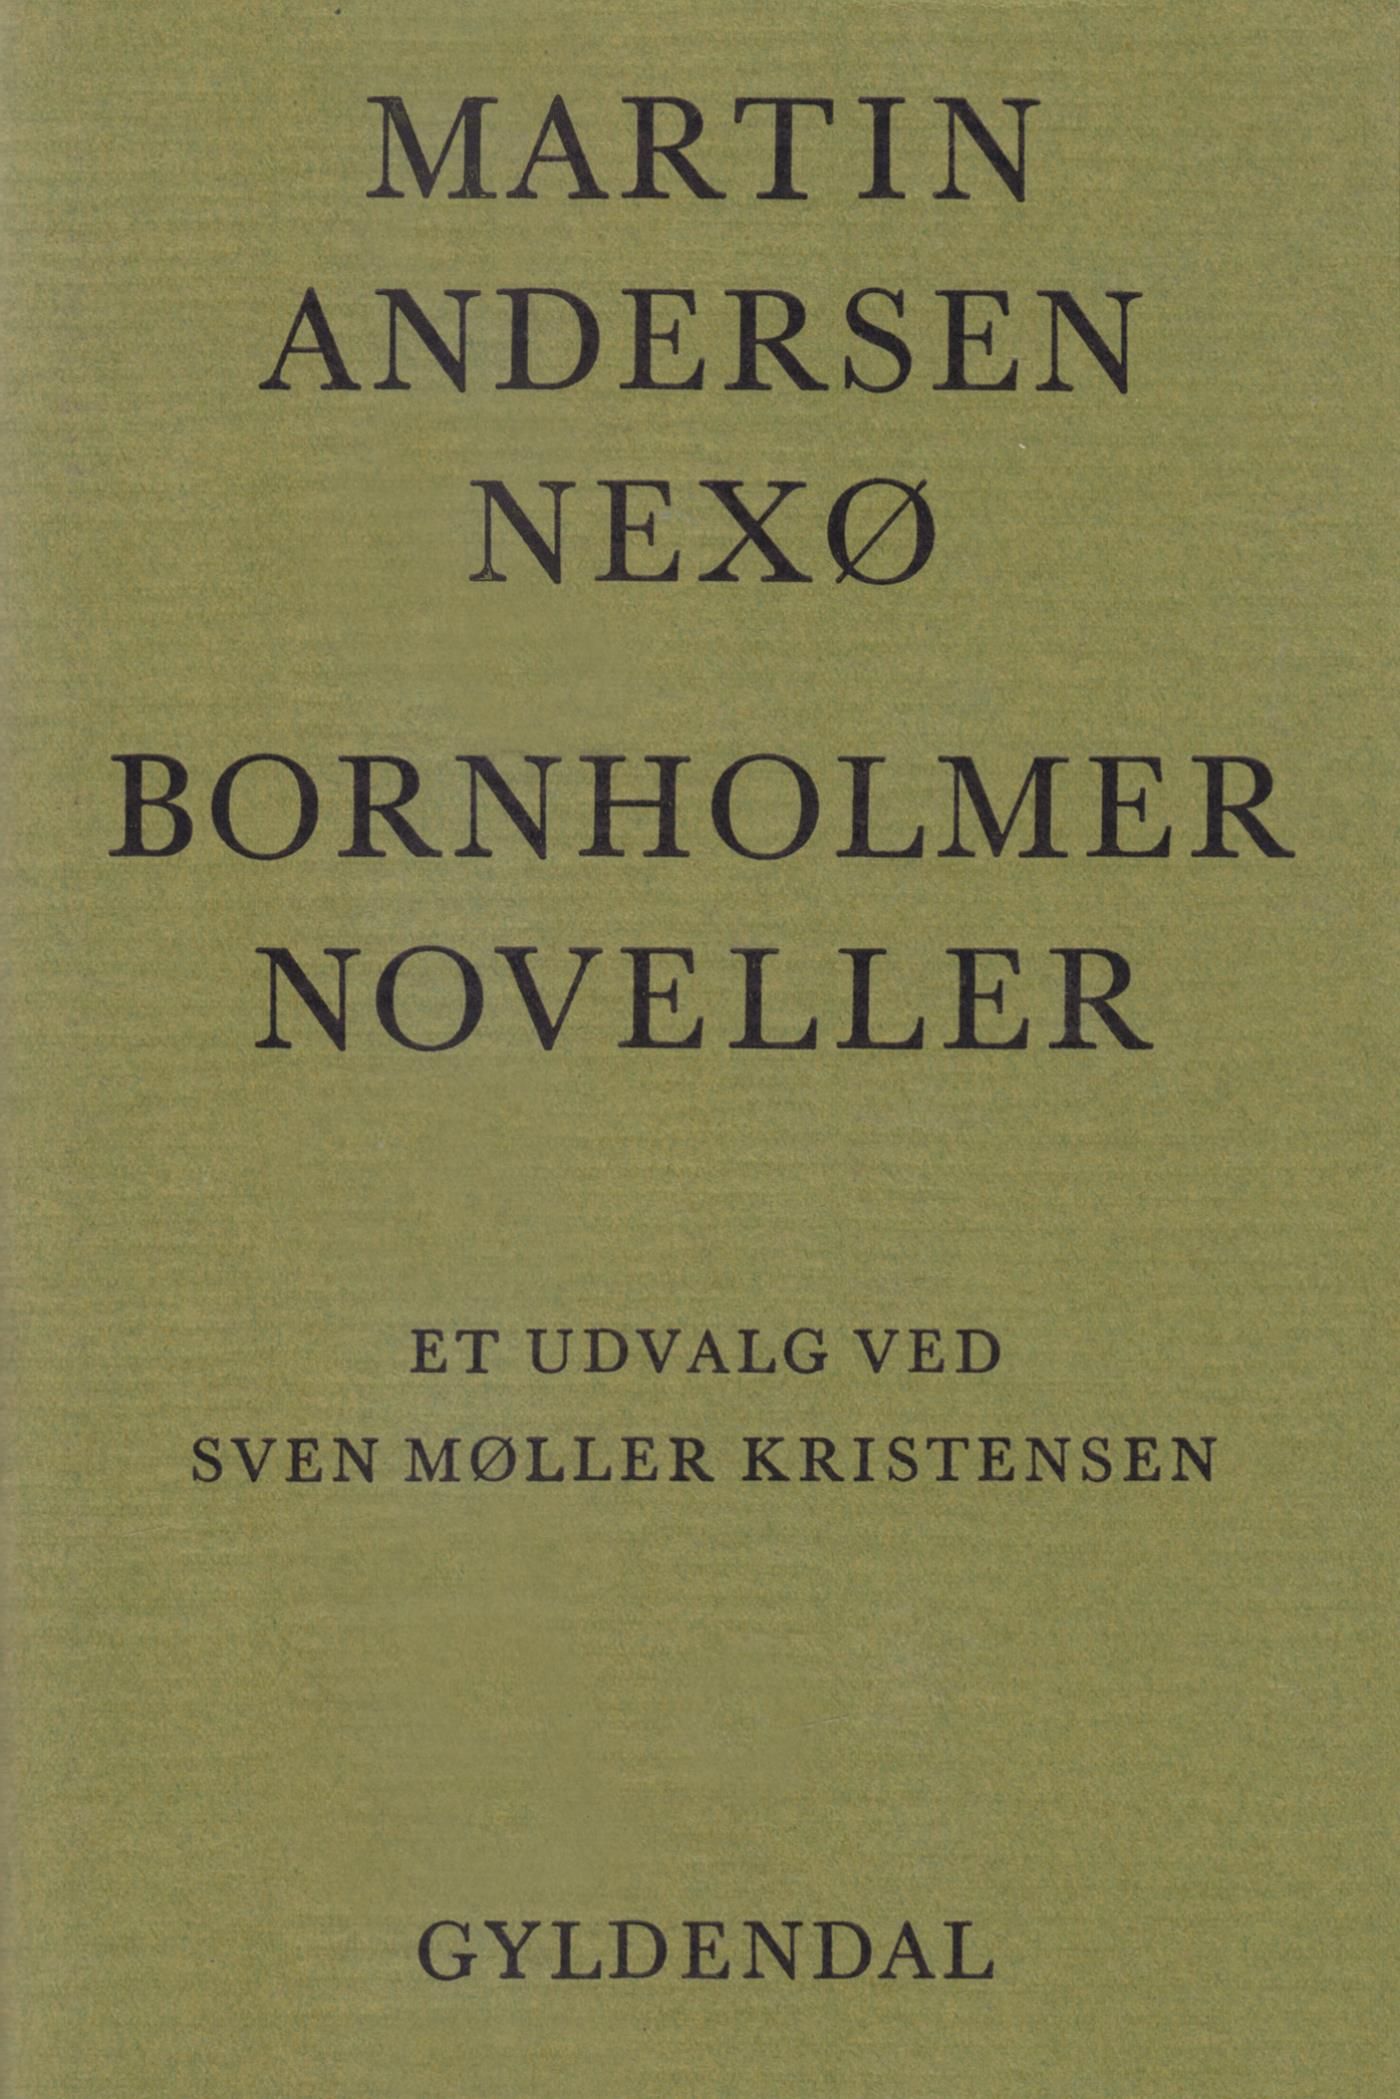 Bornholmer-Noveller, eBook by Martin Andersen Nexø